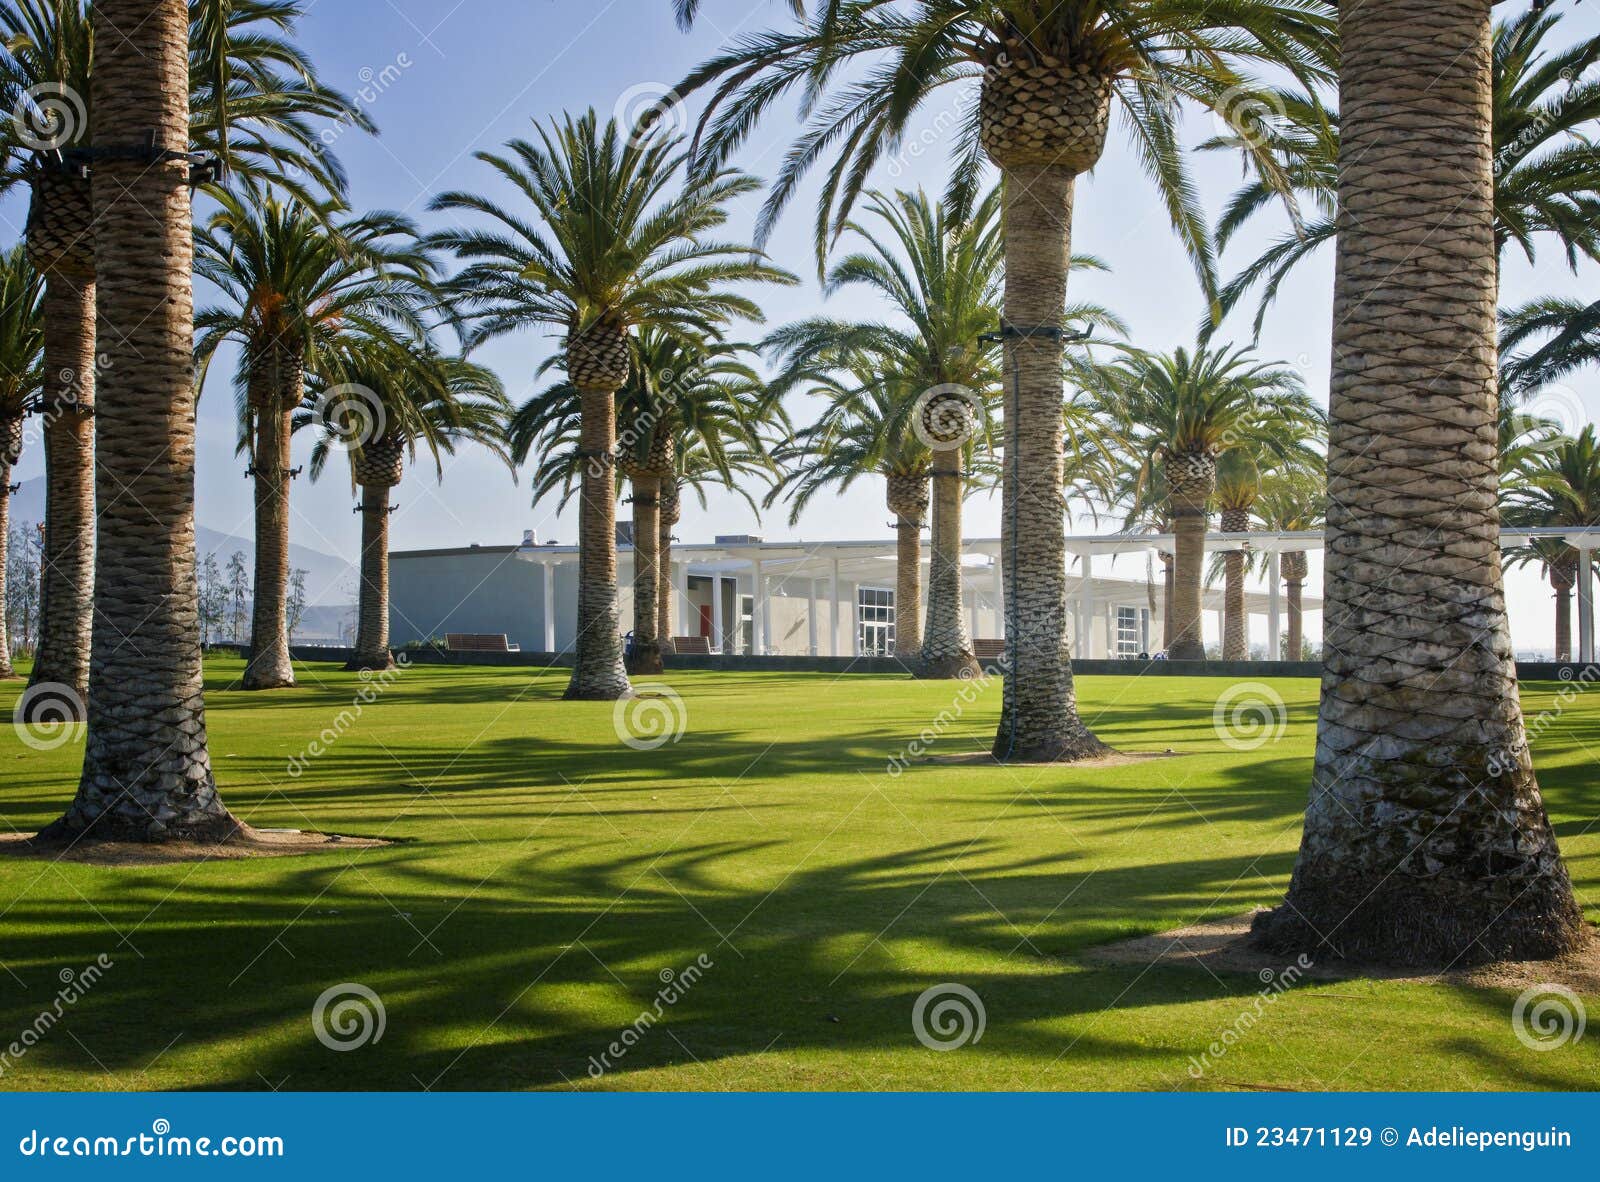 palm court, orange county great park, california